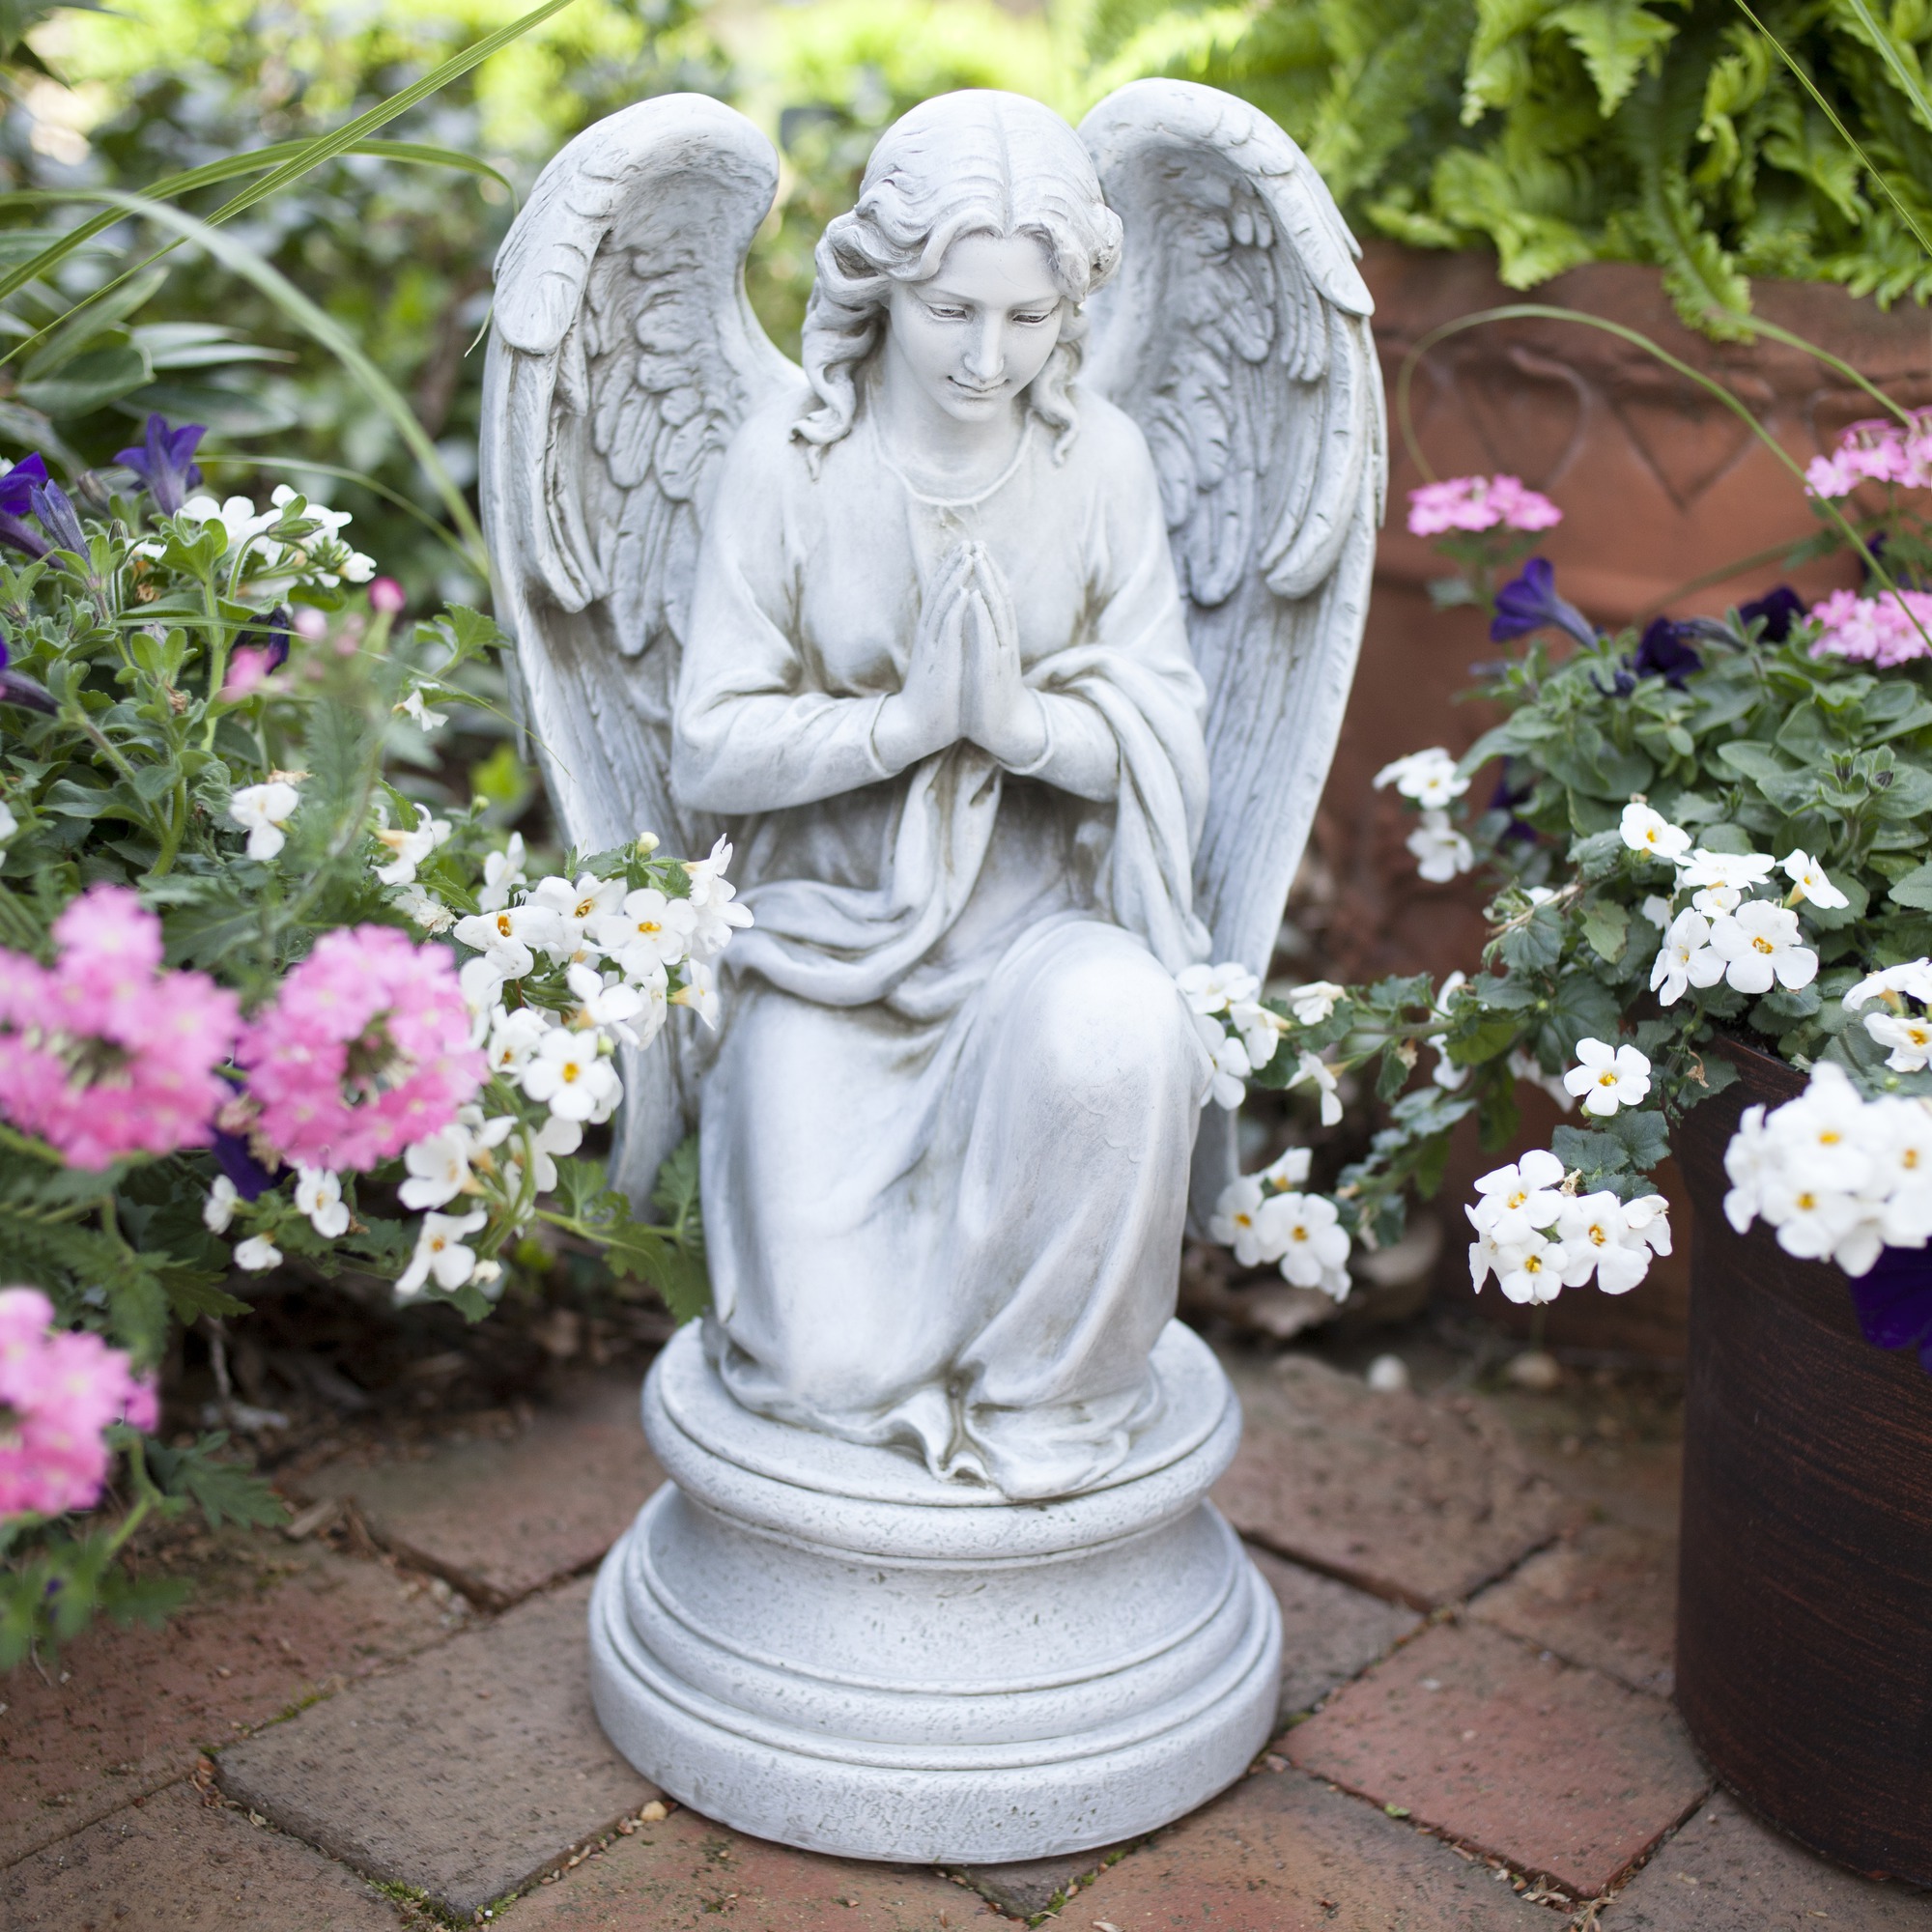 Kneeling/Praying Guardian Angel Outdoor Statue | The Catholic Company